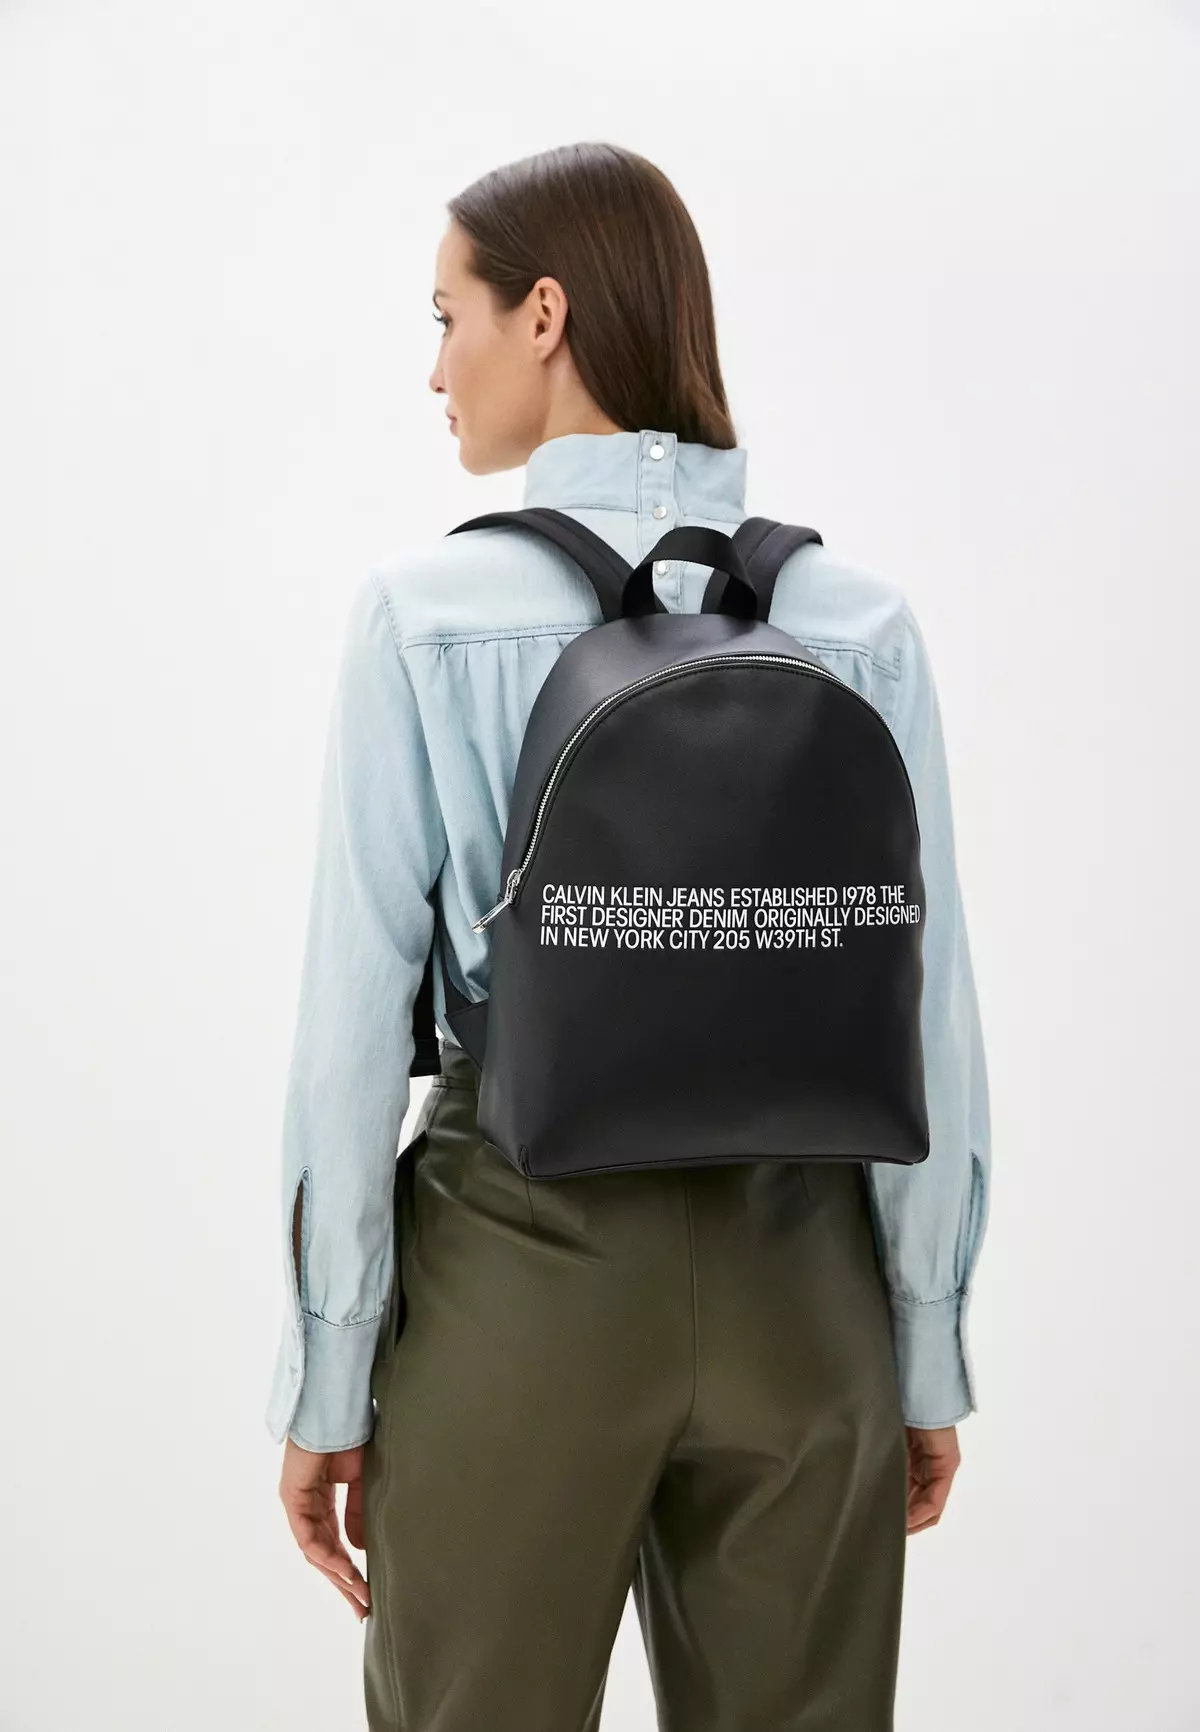 Calvin Klein Backpacks: Black Kike na Mwanaume, Leather Red, White, Yellow Kwa Monogramm na Rangi nyingine Mifuko - Backpacks 15401_2